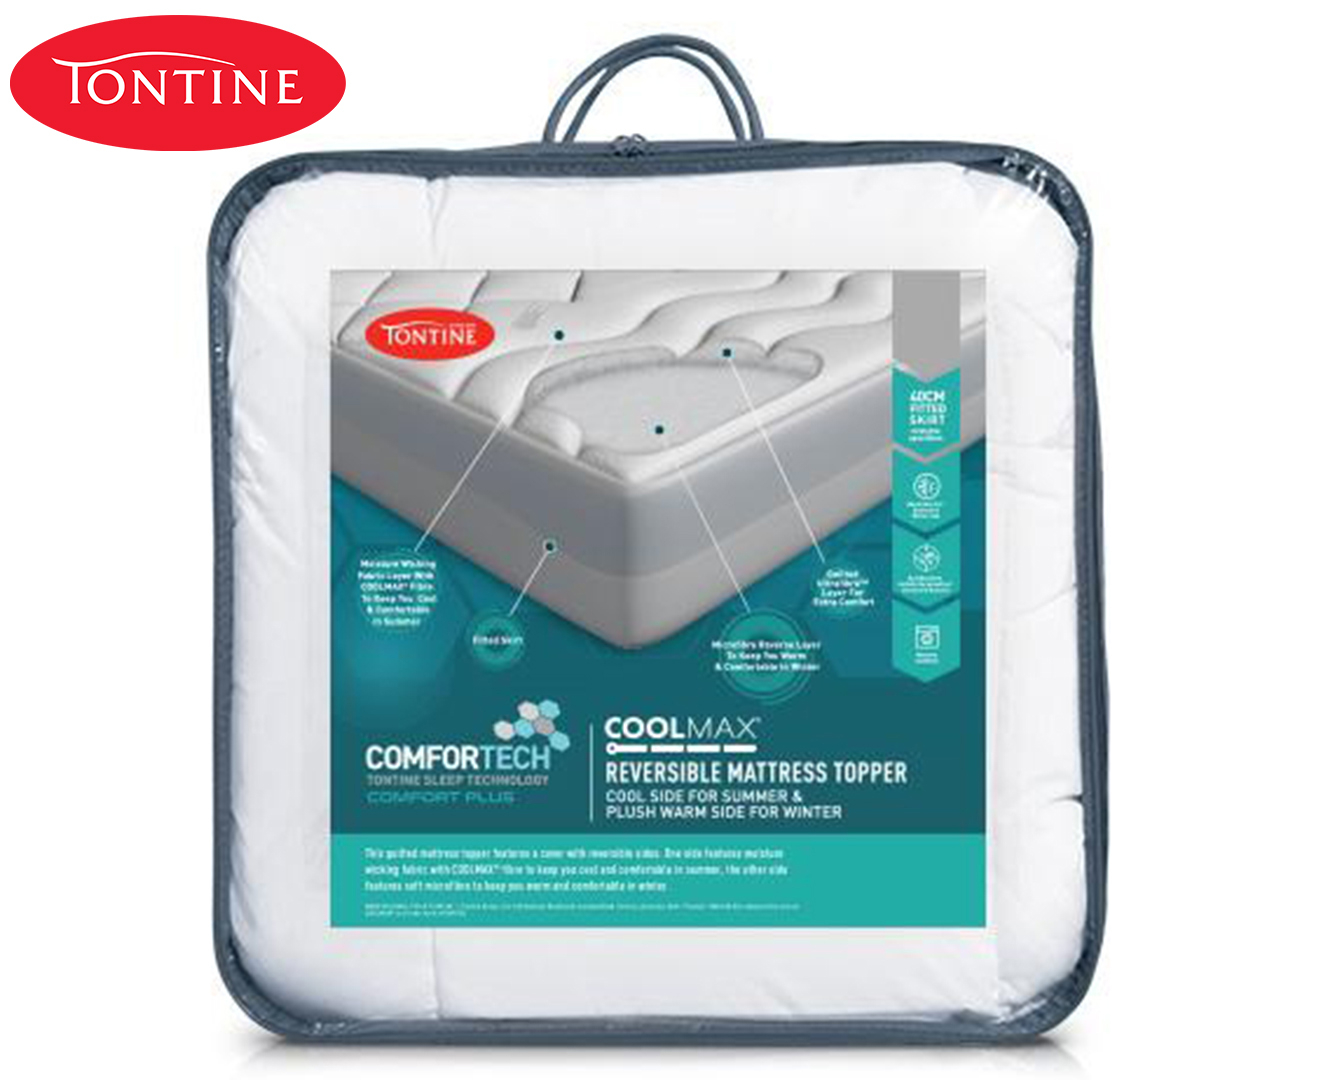 tontine comfortech coolmax reversible mattress topper